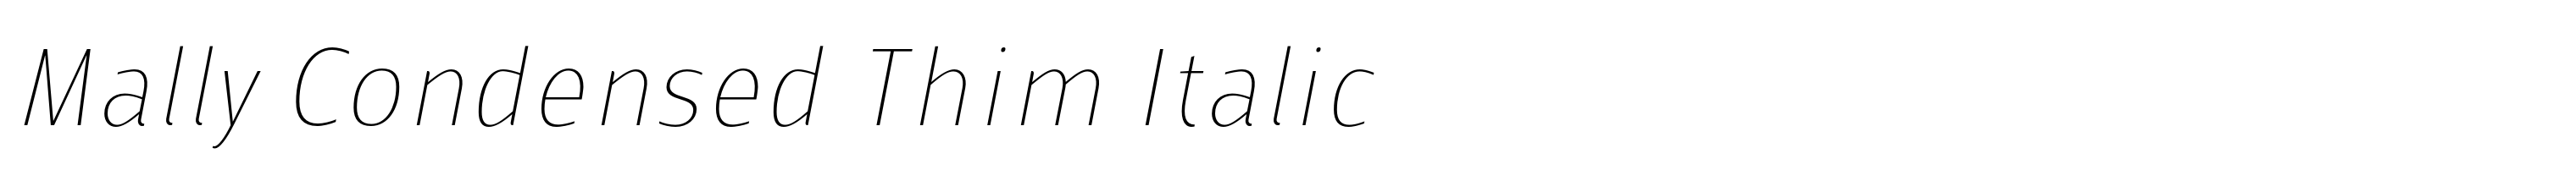 Mally Condensed Thim Italic